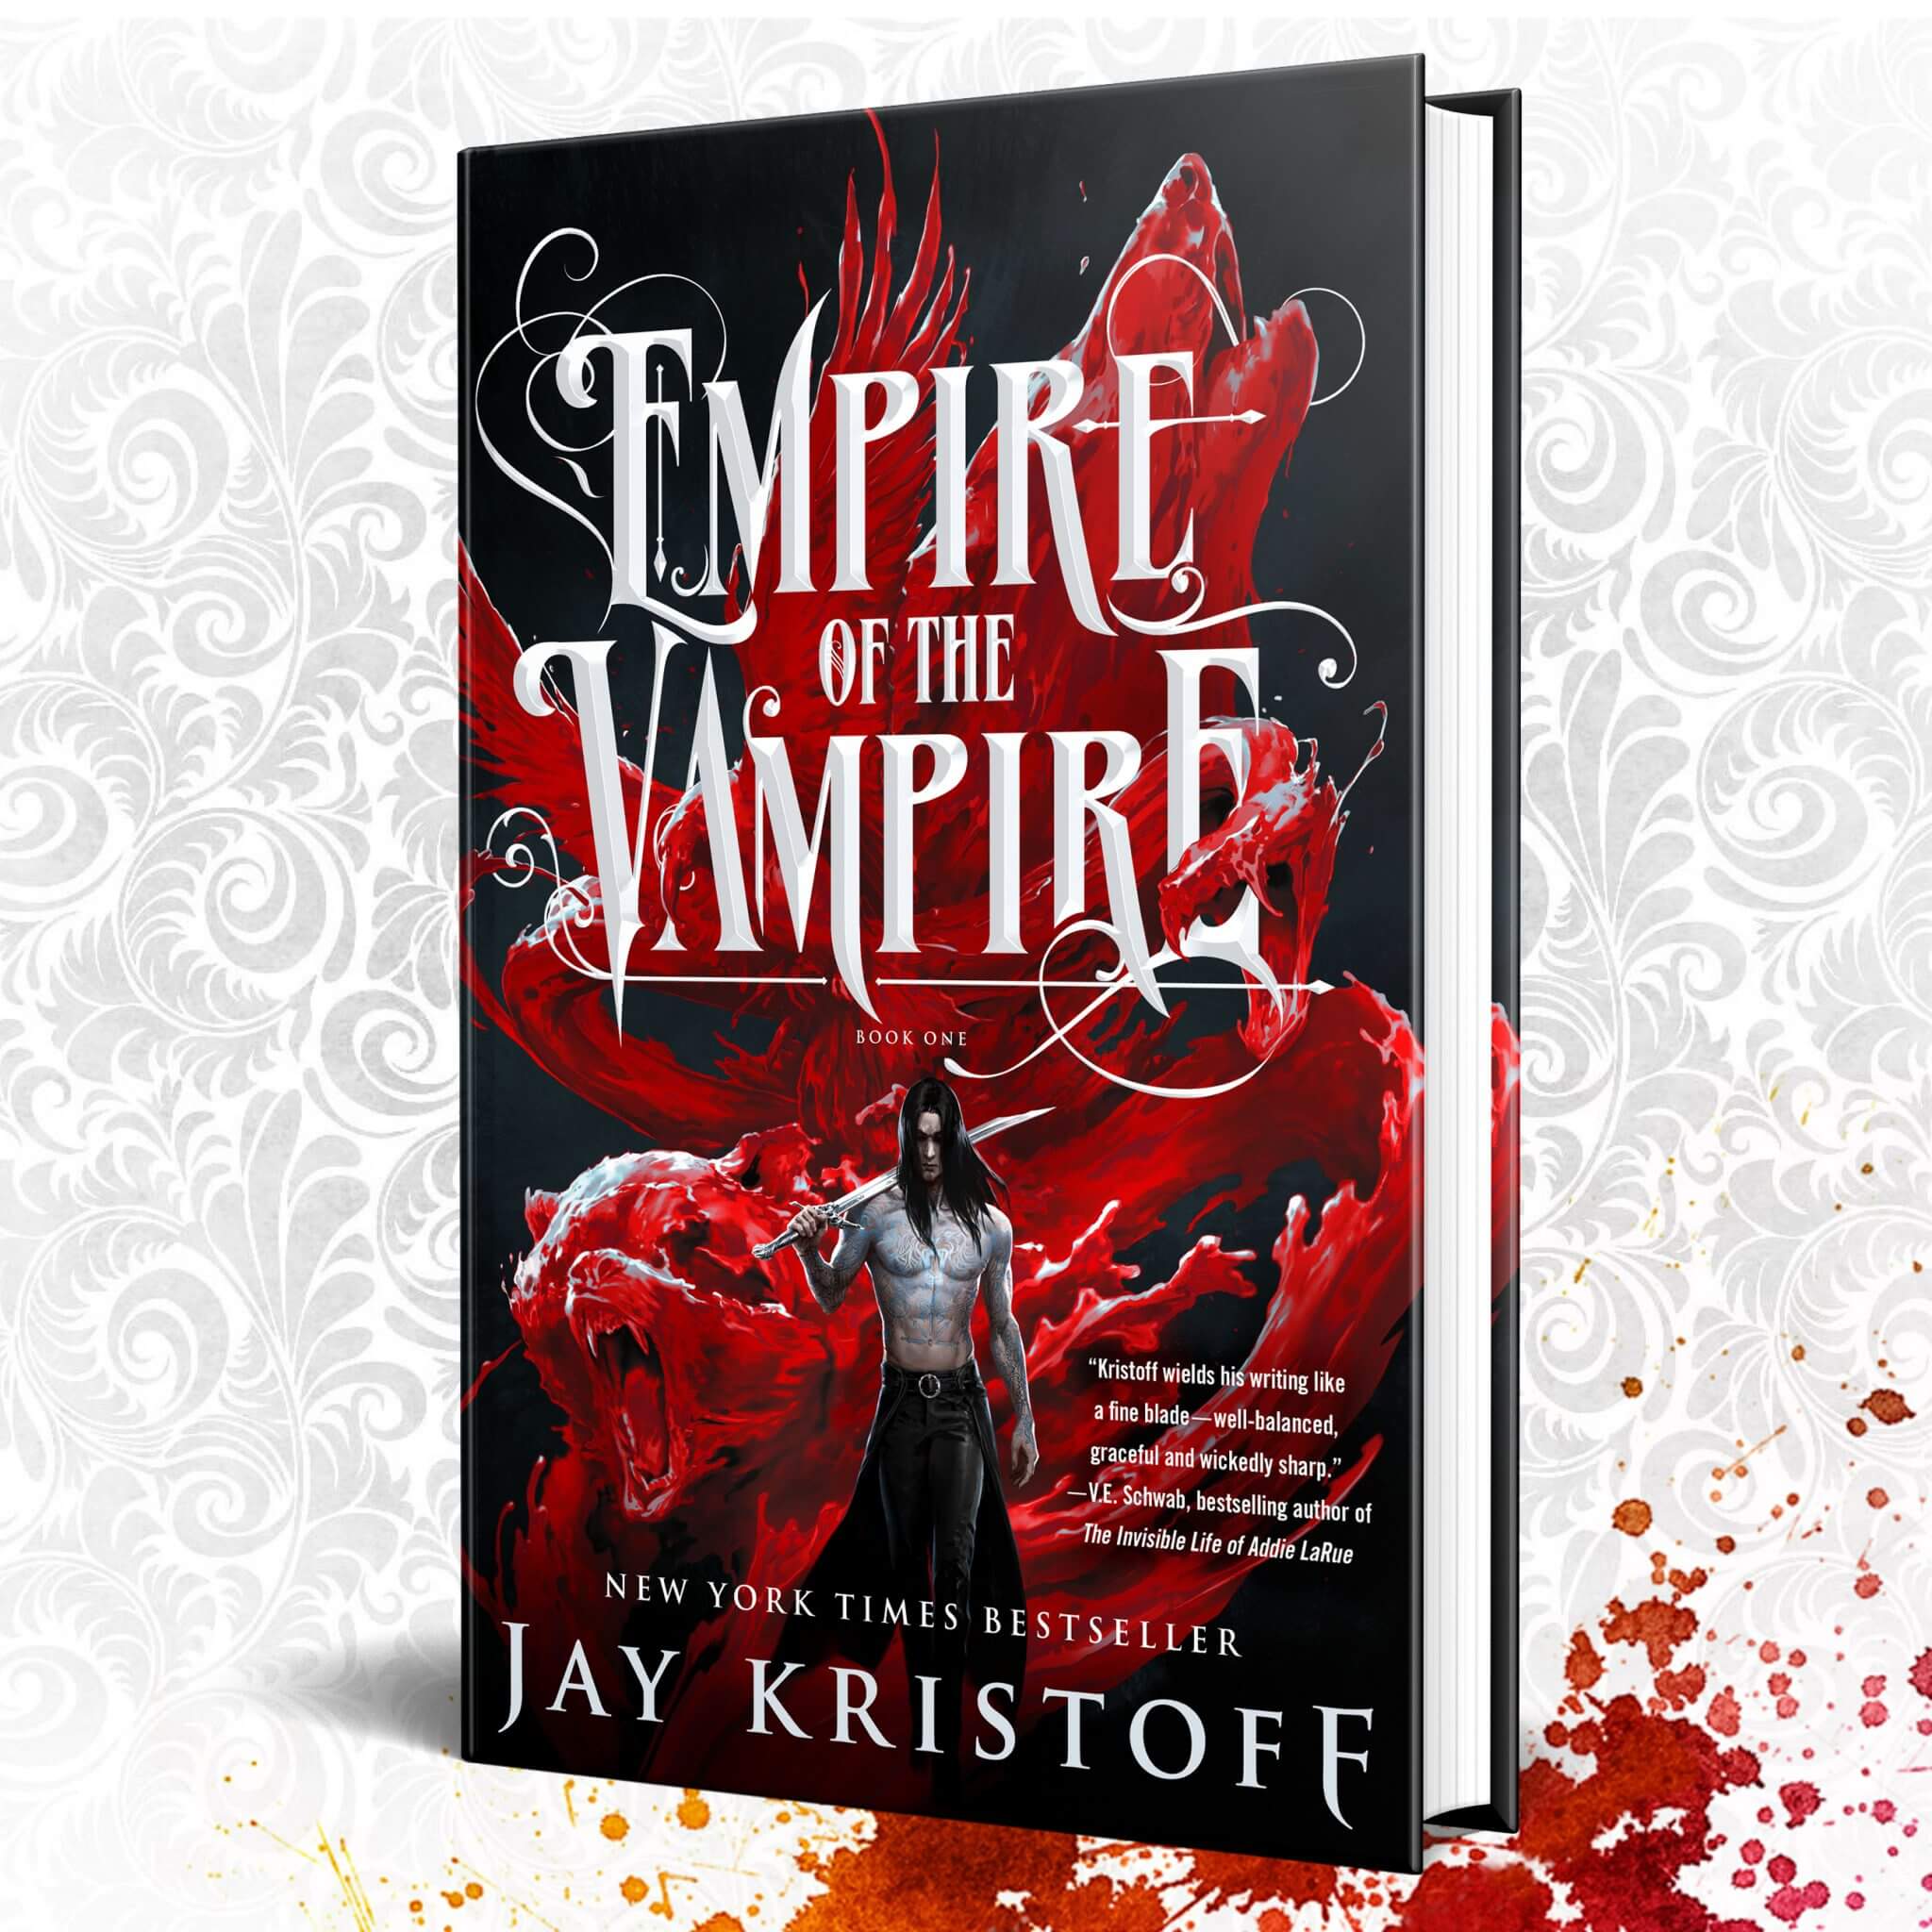 empire of the vampire book series